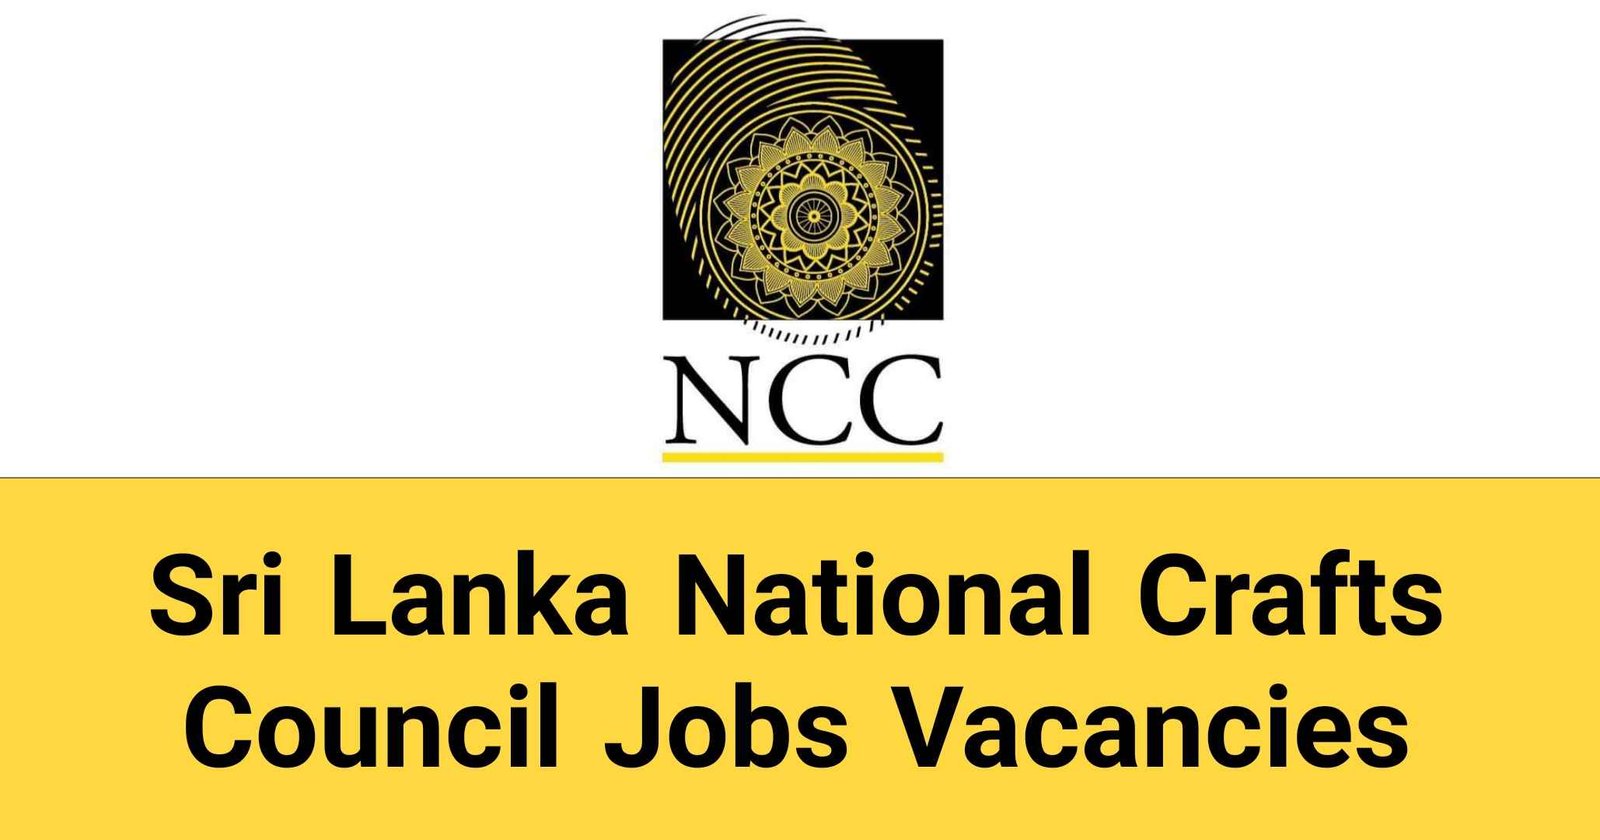 Sri Lanka National Crafts Council Jobs Vacancies Careers